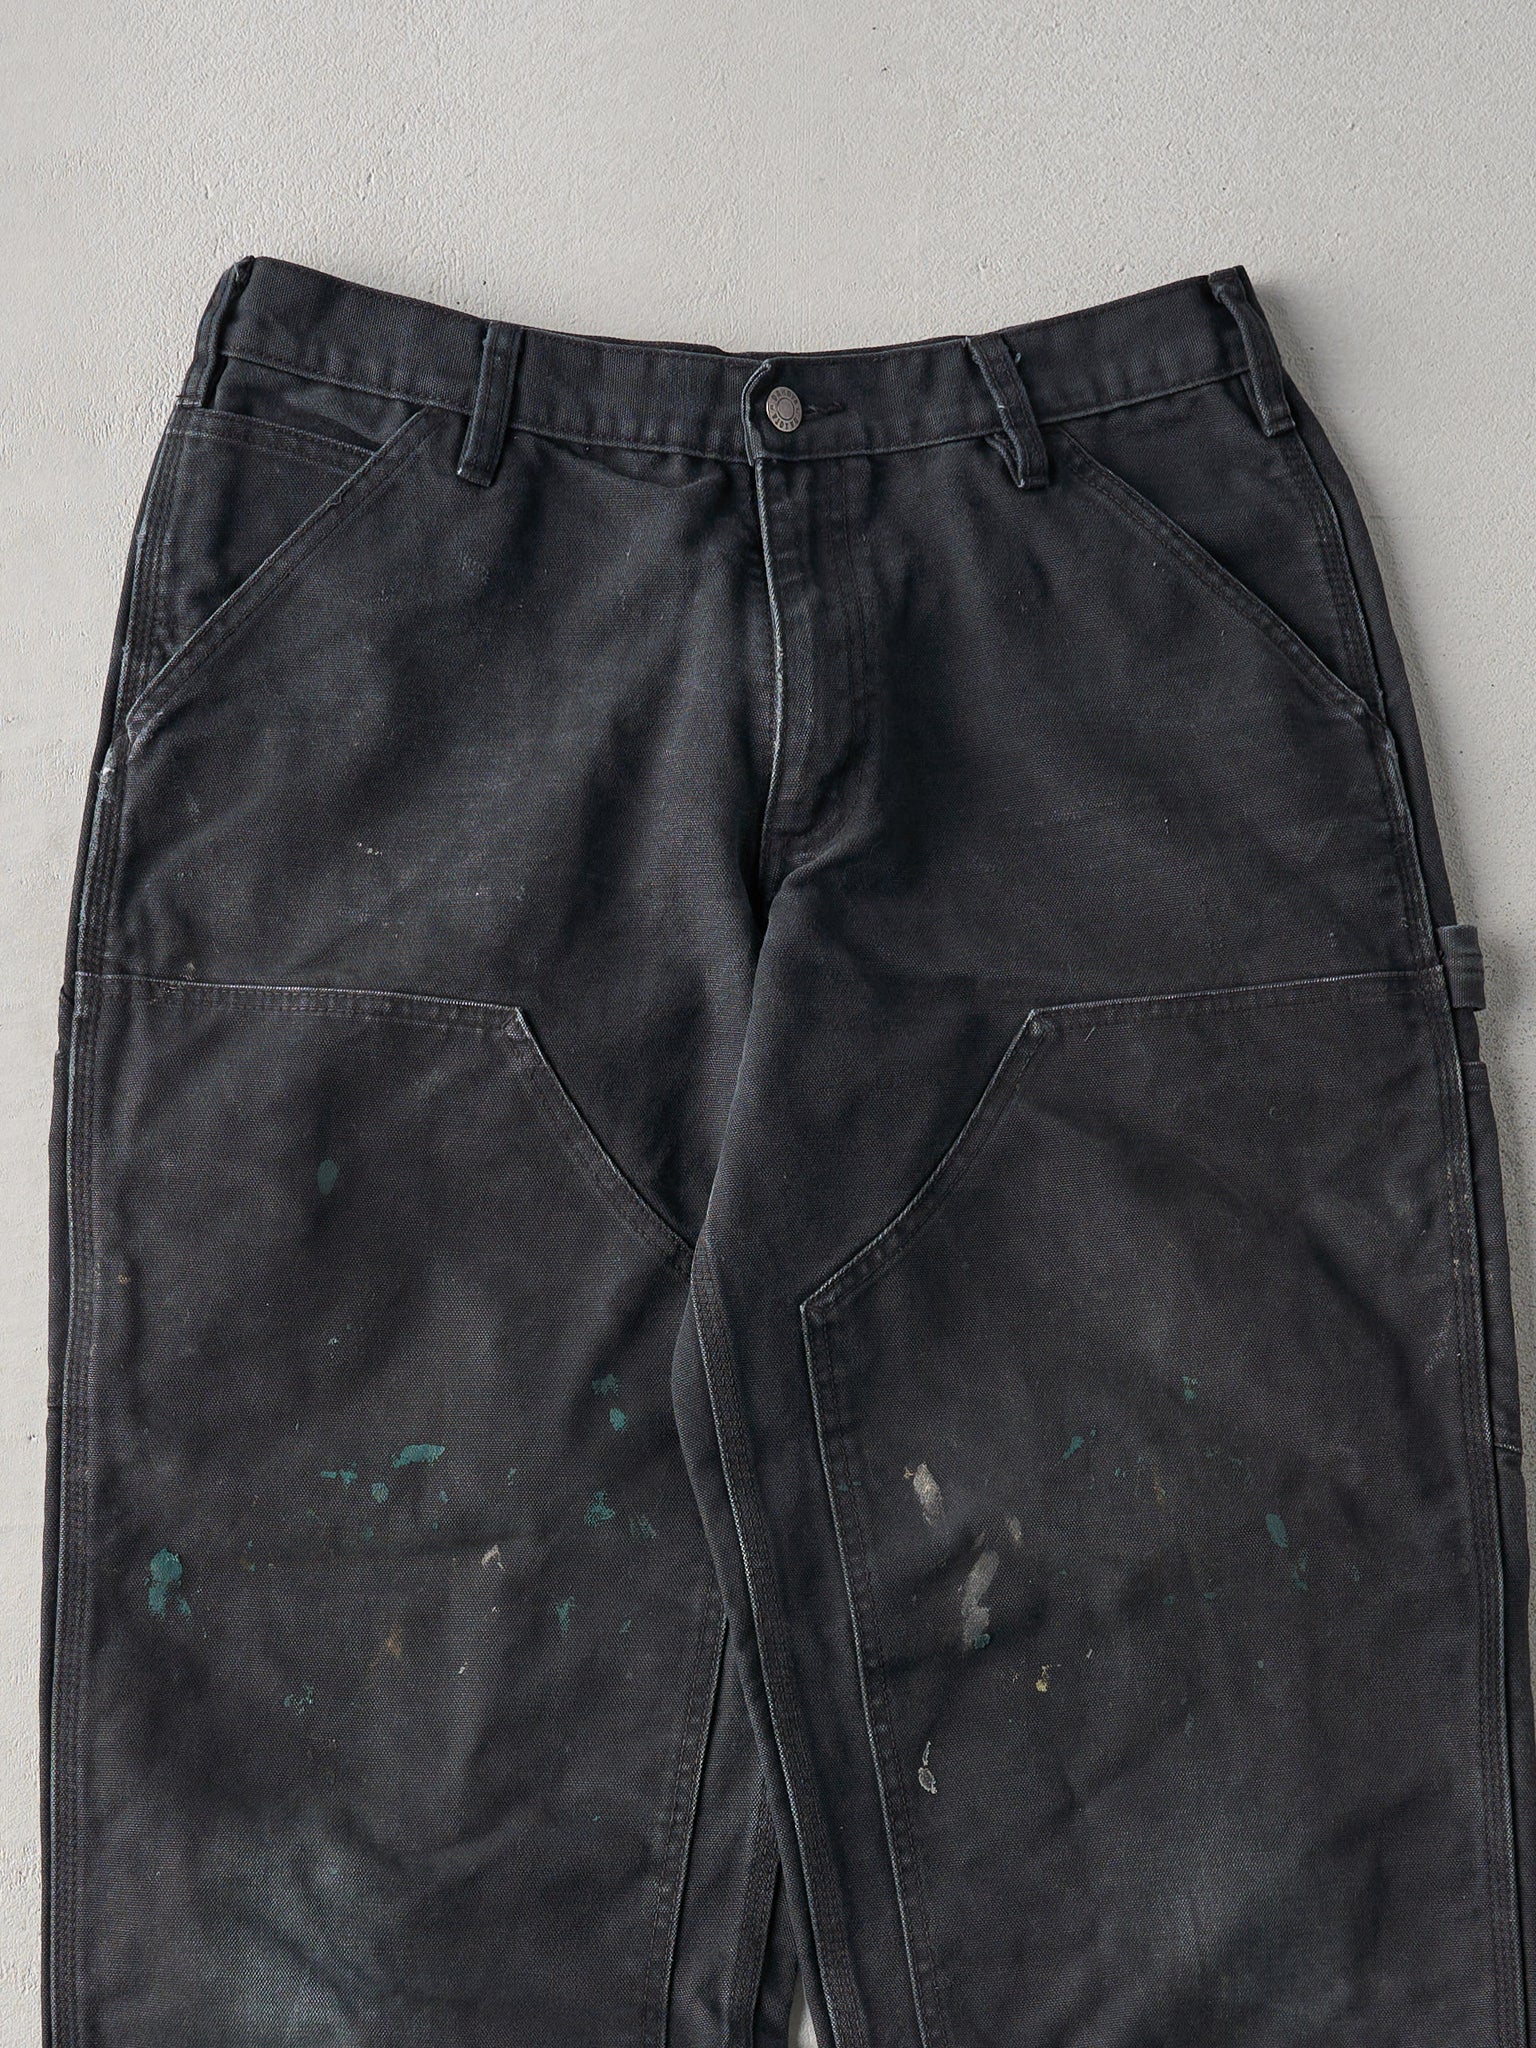 Vintage 90s Black Dakota Double Knee Carpenter Pants (32x27.5)